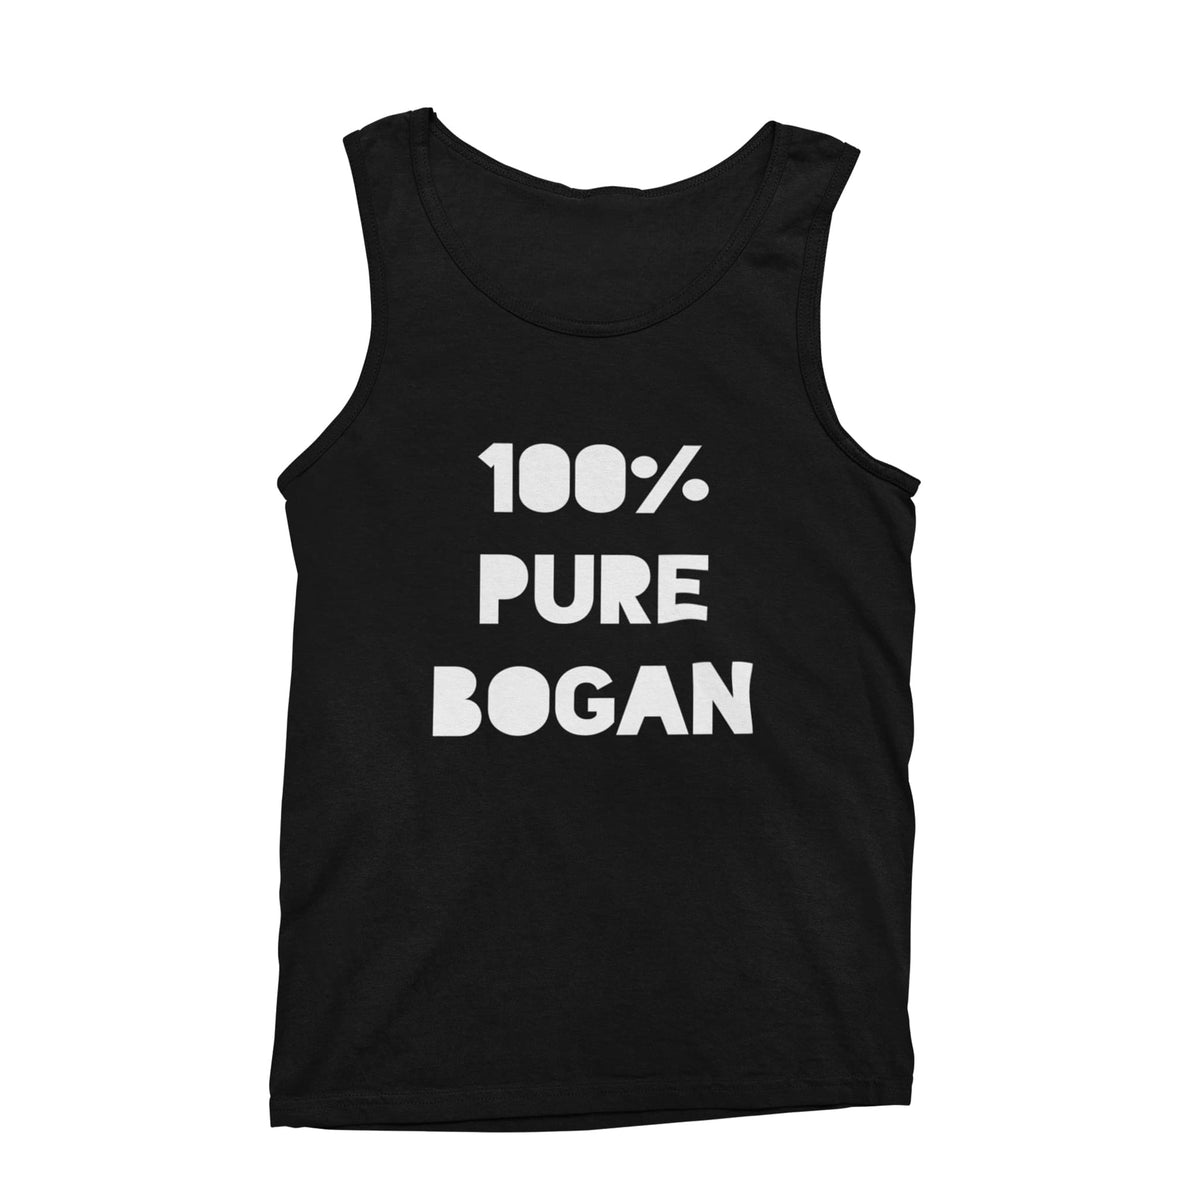 The 100% Pure Bogan Tank